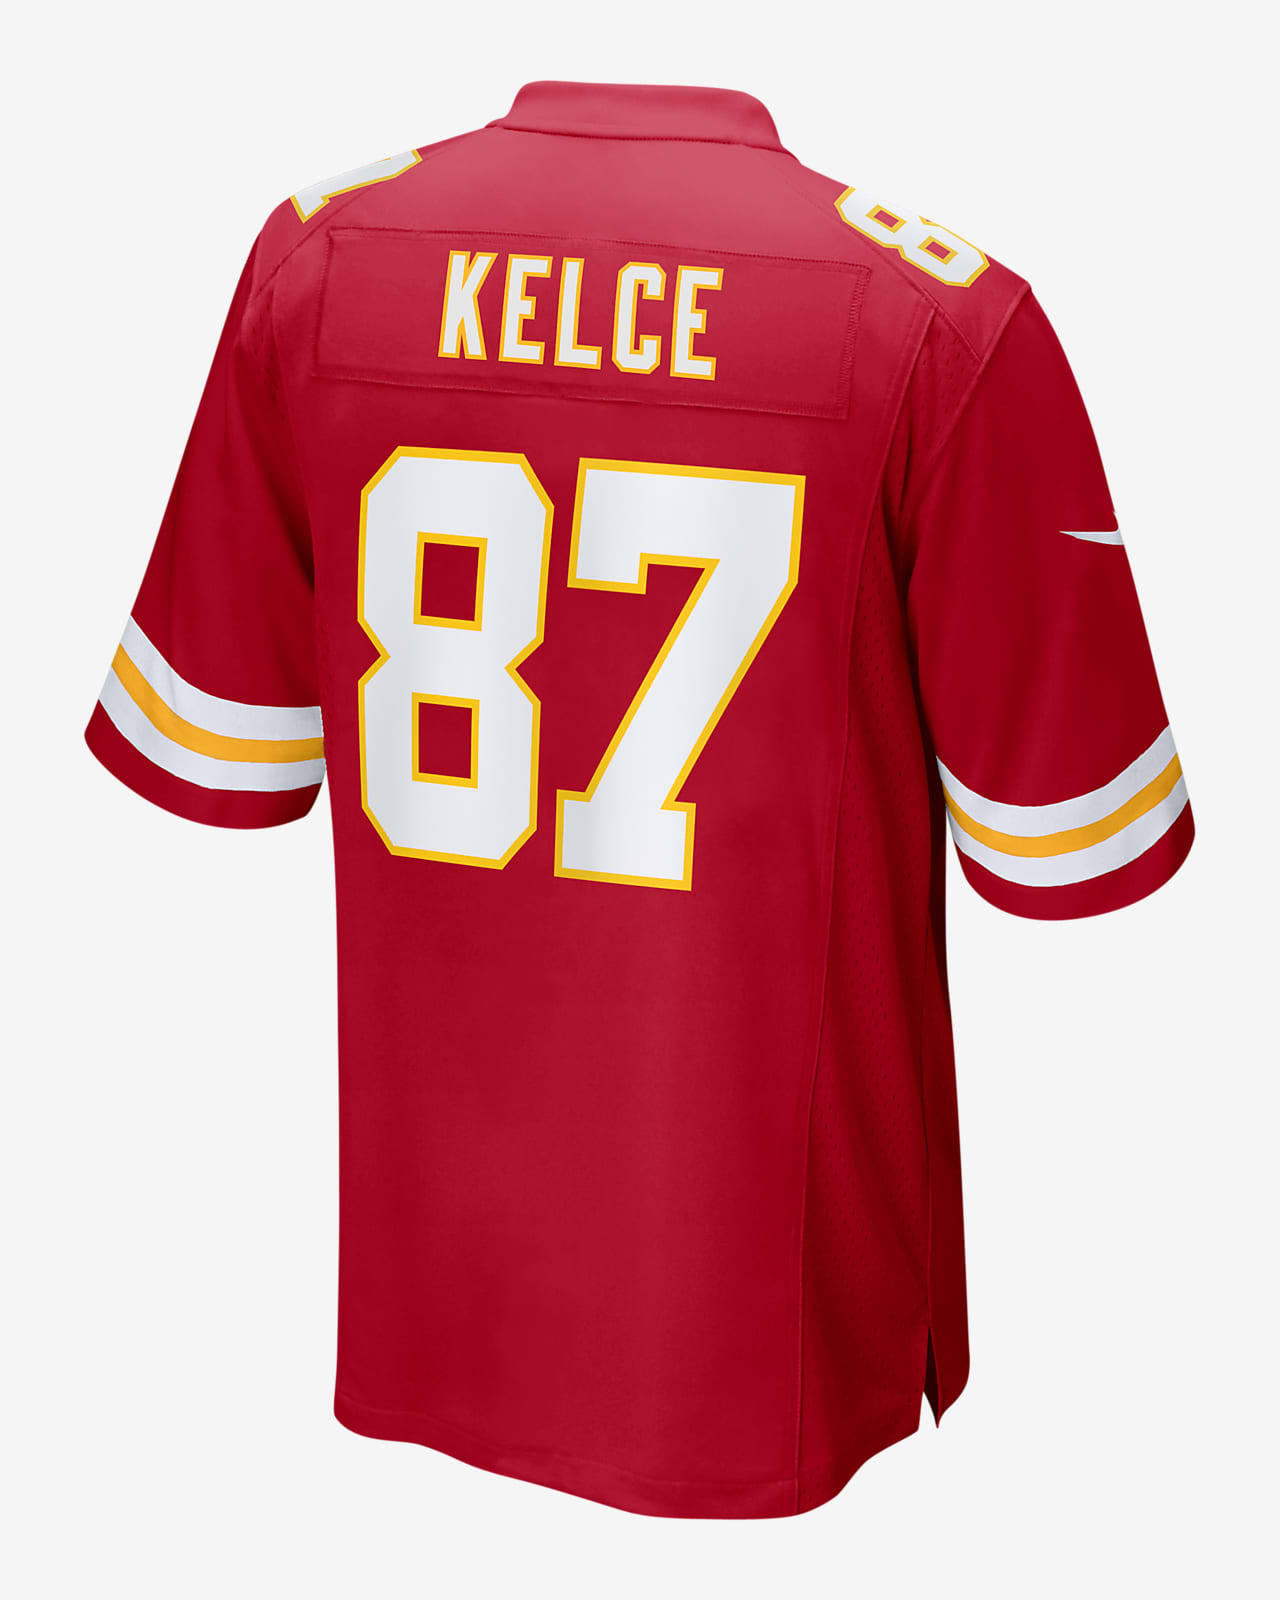 Men's Nike Travis Kelce Gray Kansas City Chiefs Super Bowl LVII Patch Atmosphere Fashion Game Jersey Size: 3XL